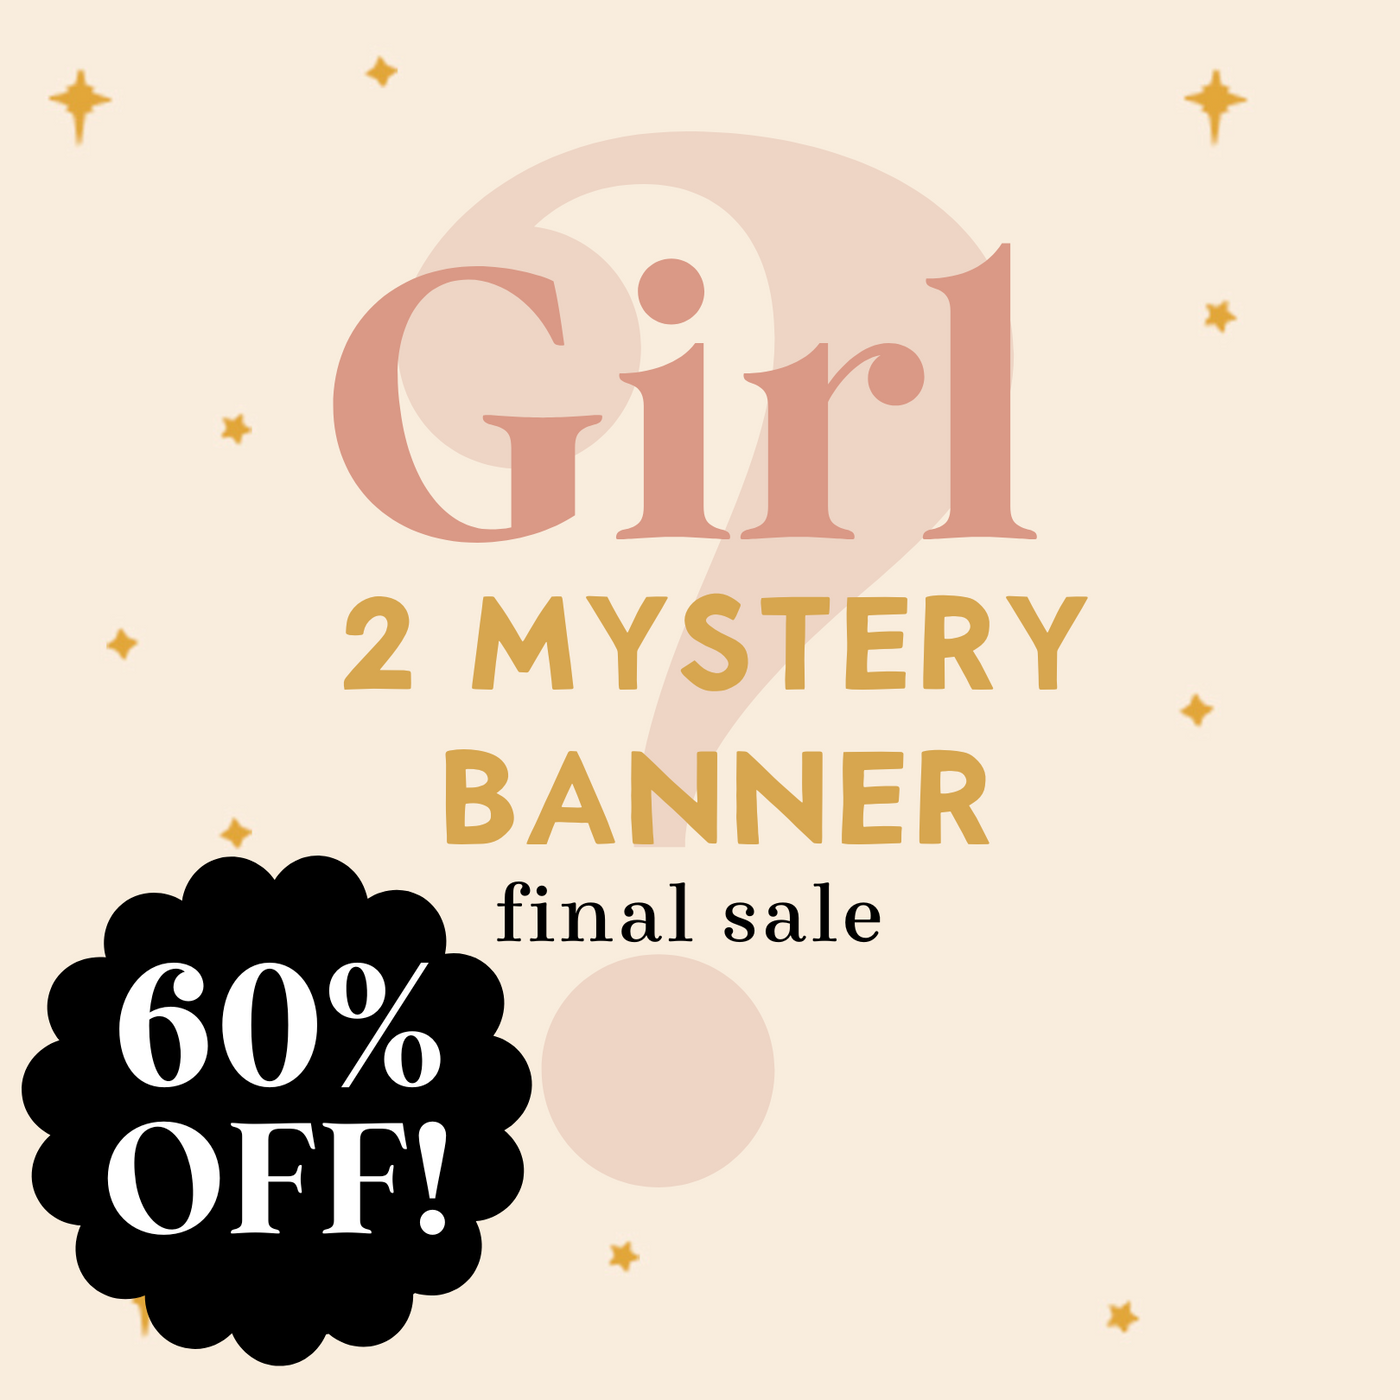 2 - 60% off Girl Mystery Holiday + Seasonal Original Size Banners